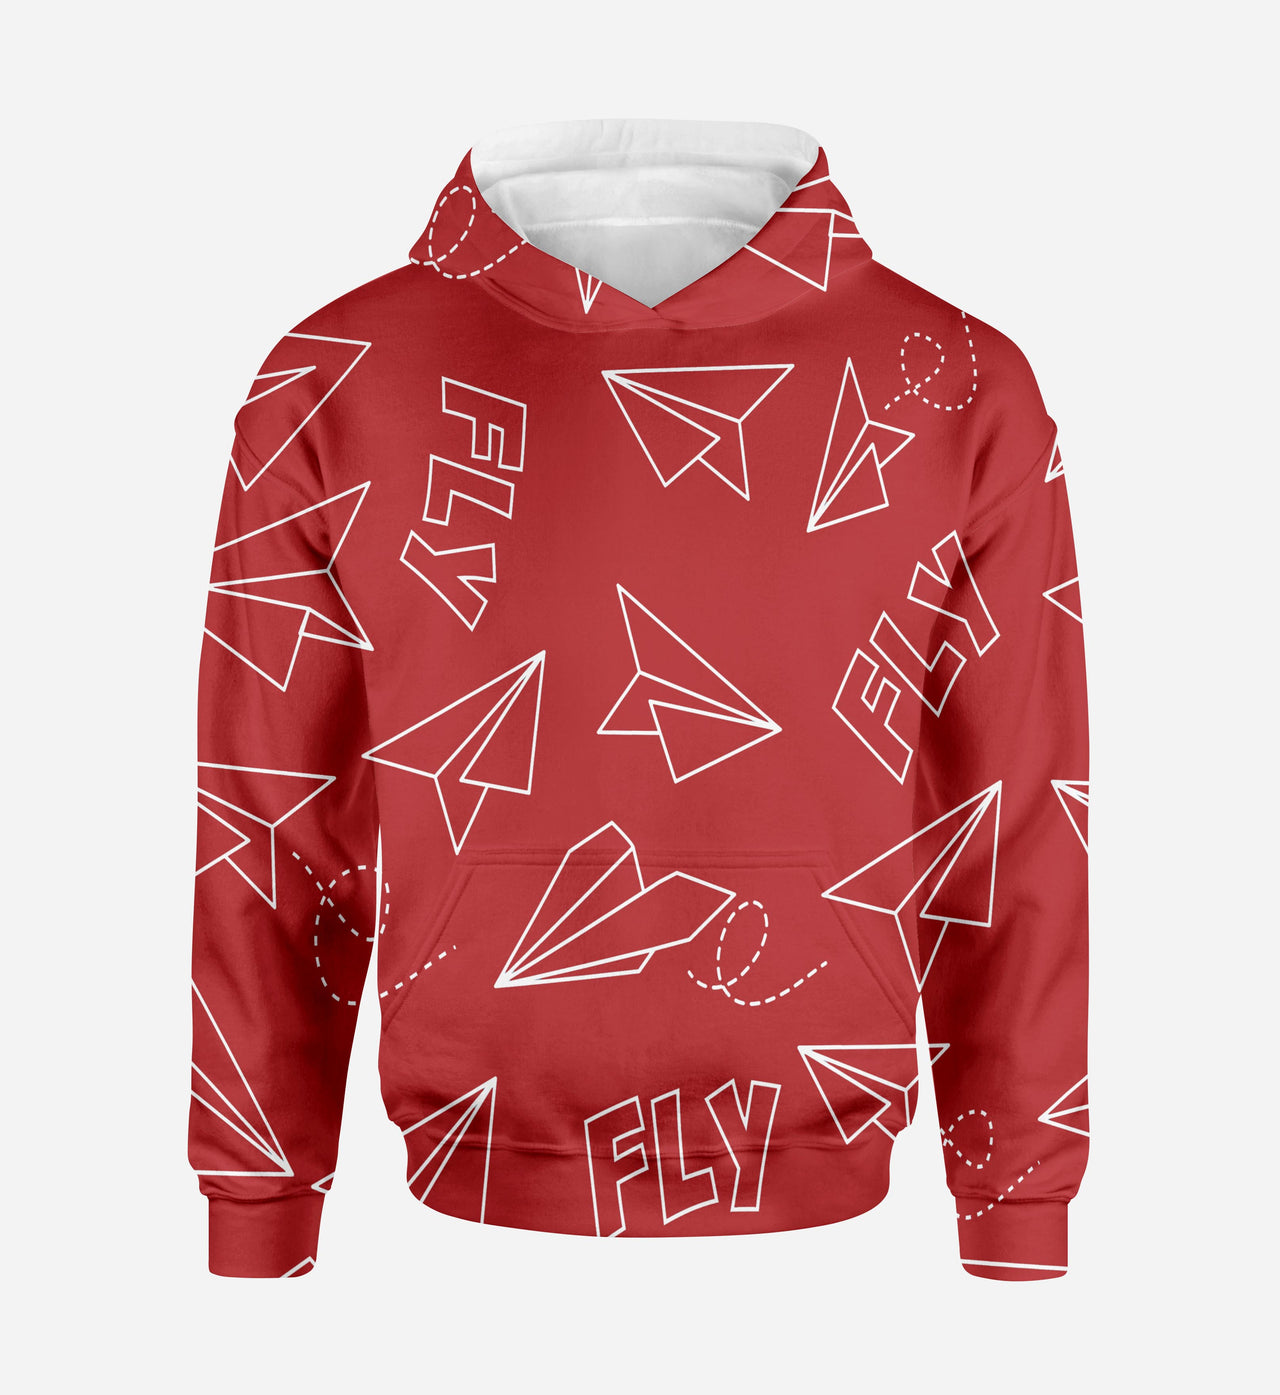 Paper Airplane & Fly (Red) Printed 3D Hoodies